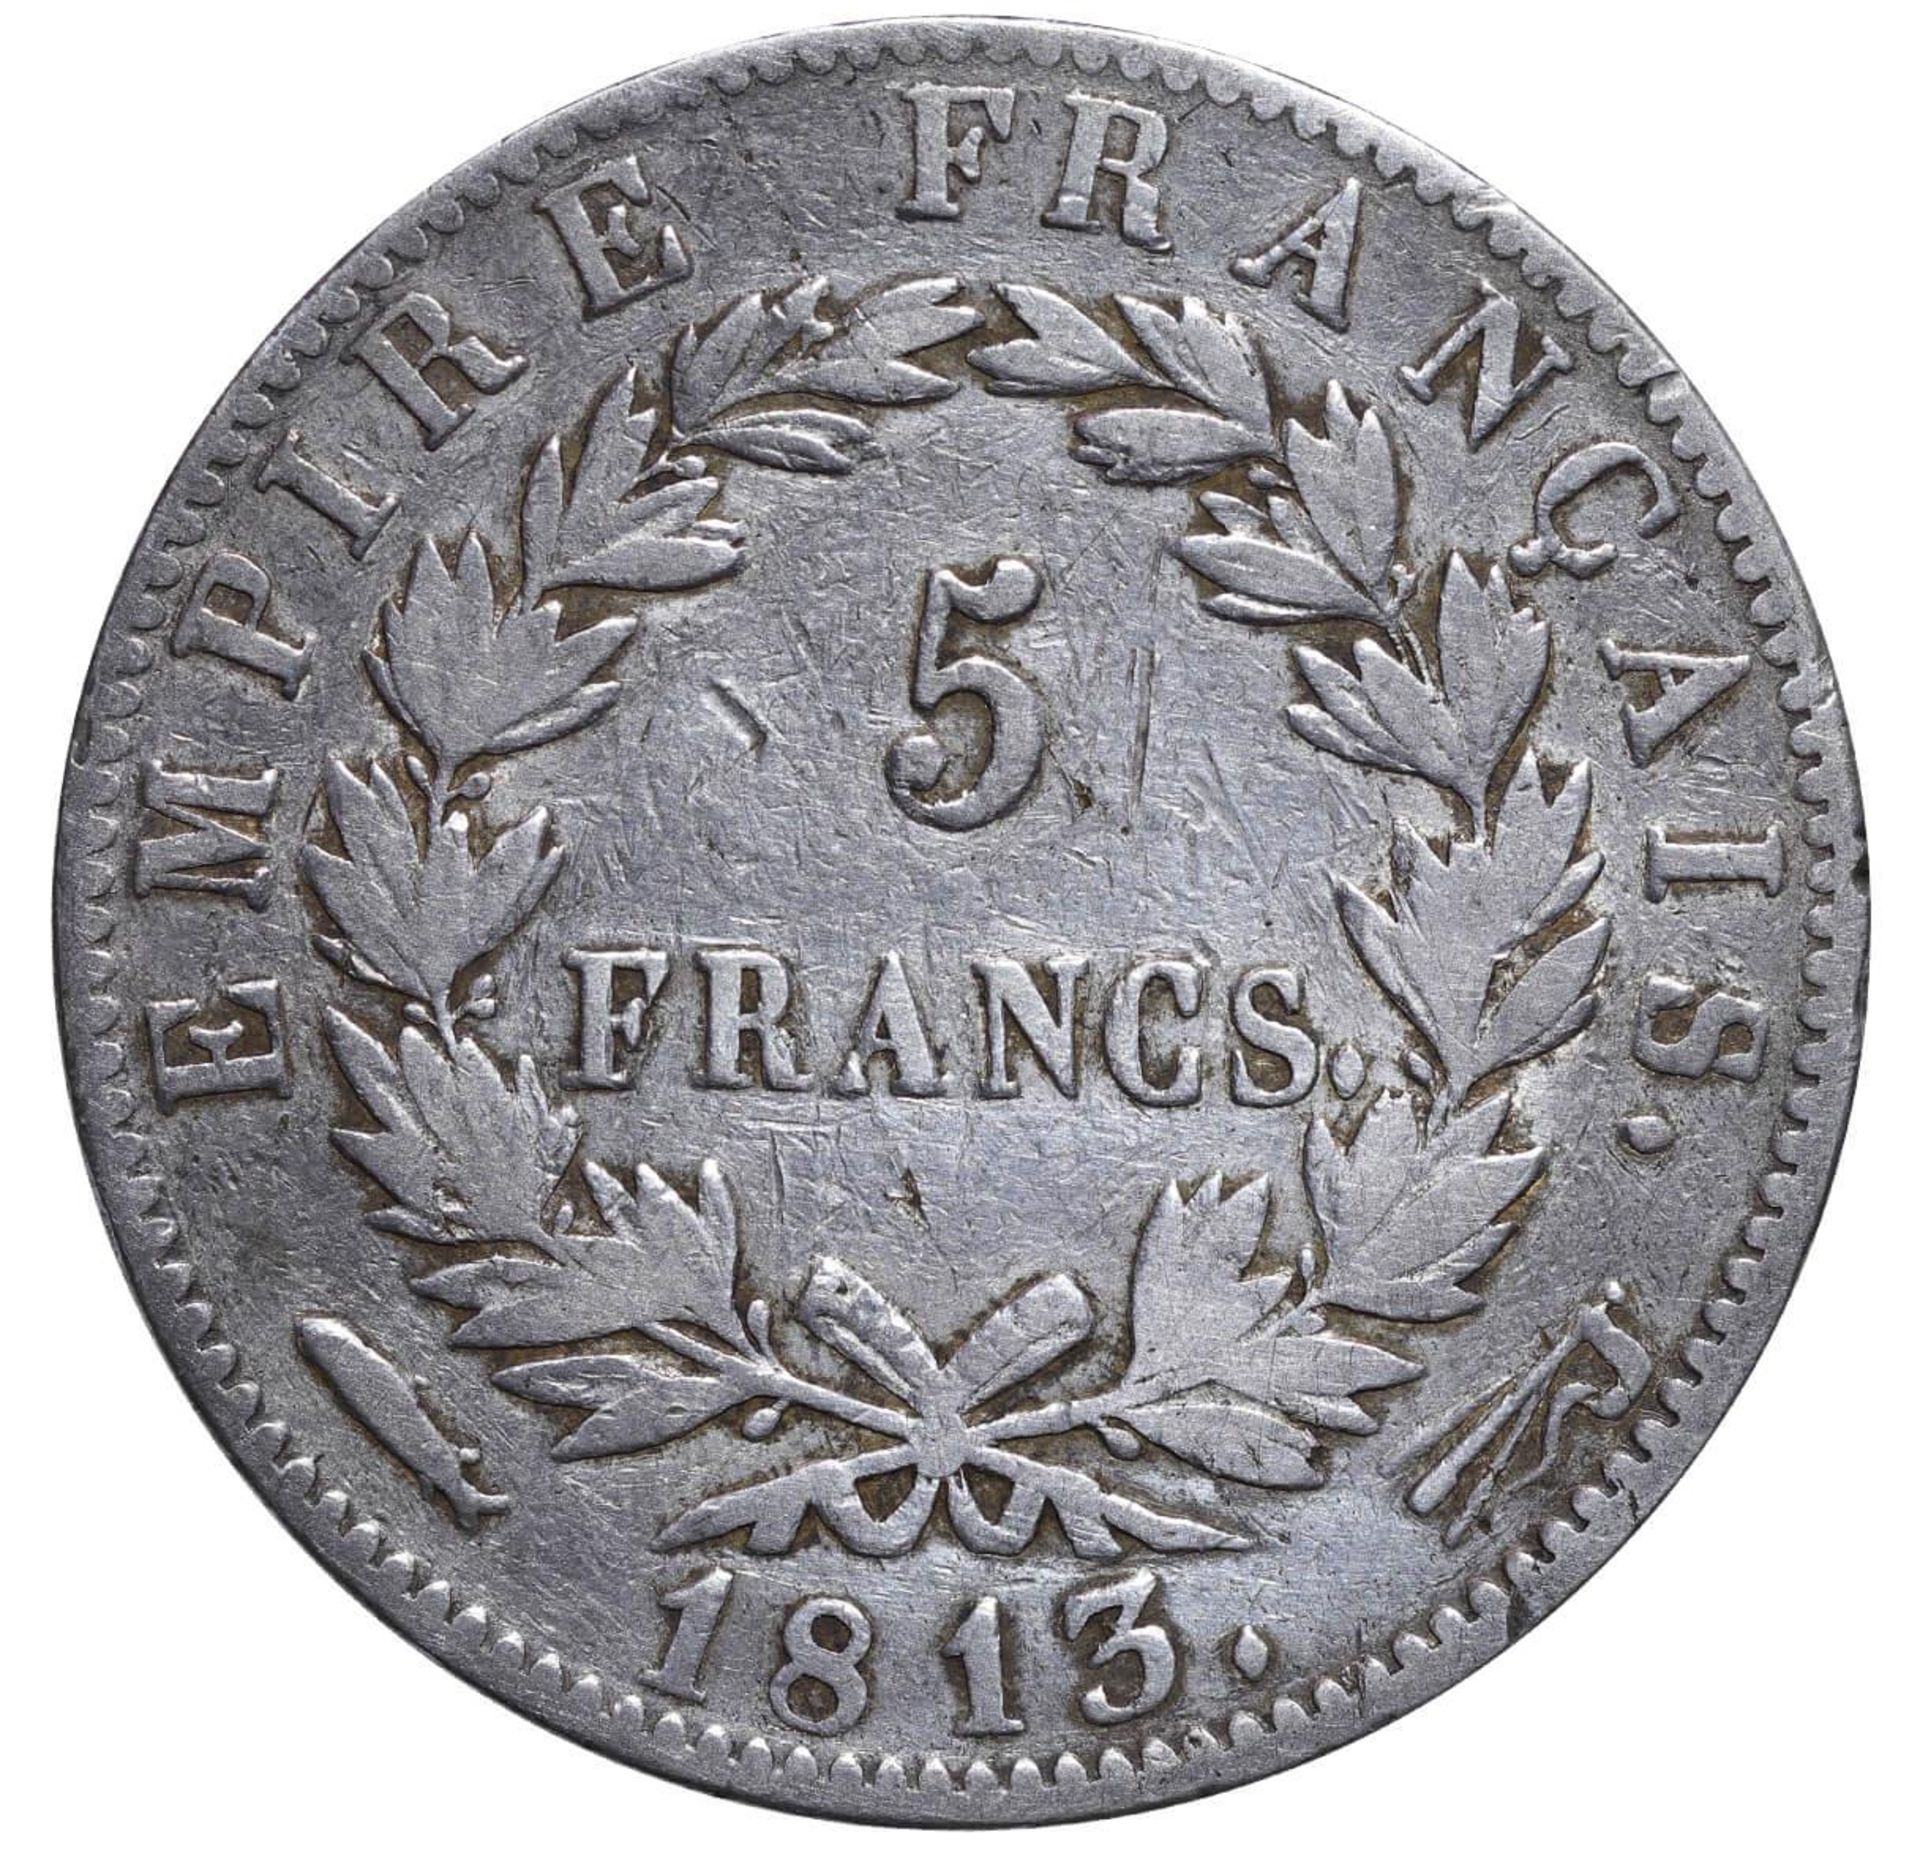 France, 5 Francs, 1813 year - Image 3 of 3